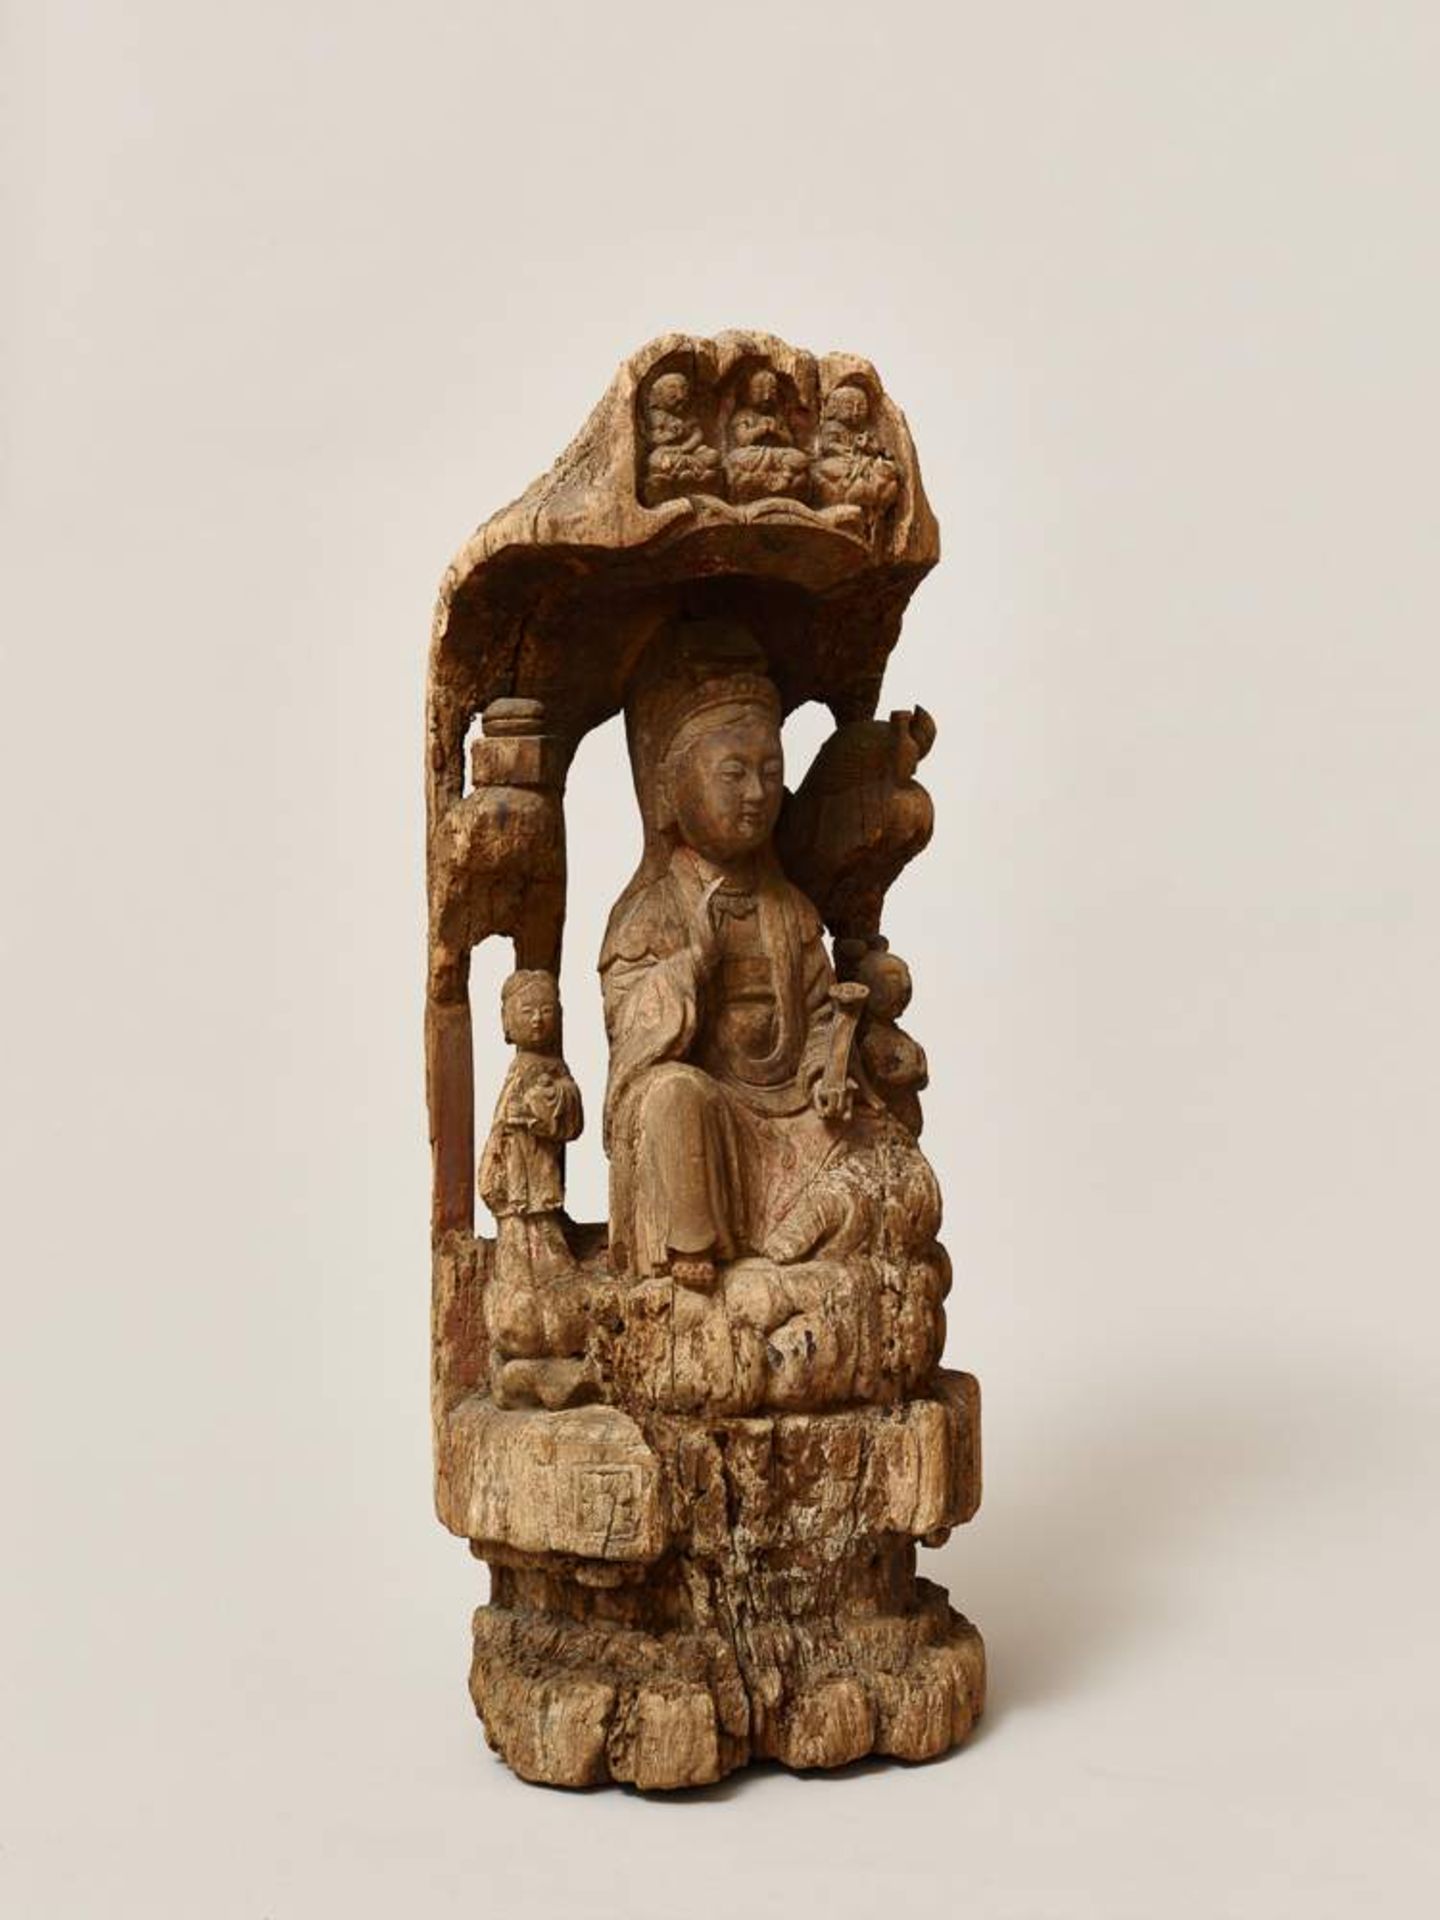 GÖTTIN GUANYIN MIT BEGLEITFIGURENHolz. China, Qing-Dynastie, 17. bis 18. Jh.Altersgesehen - Image 3 of 5